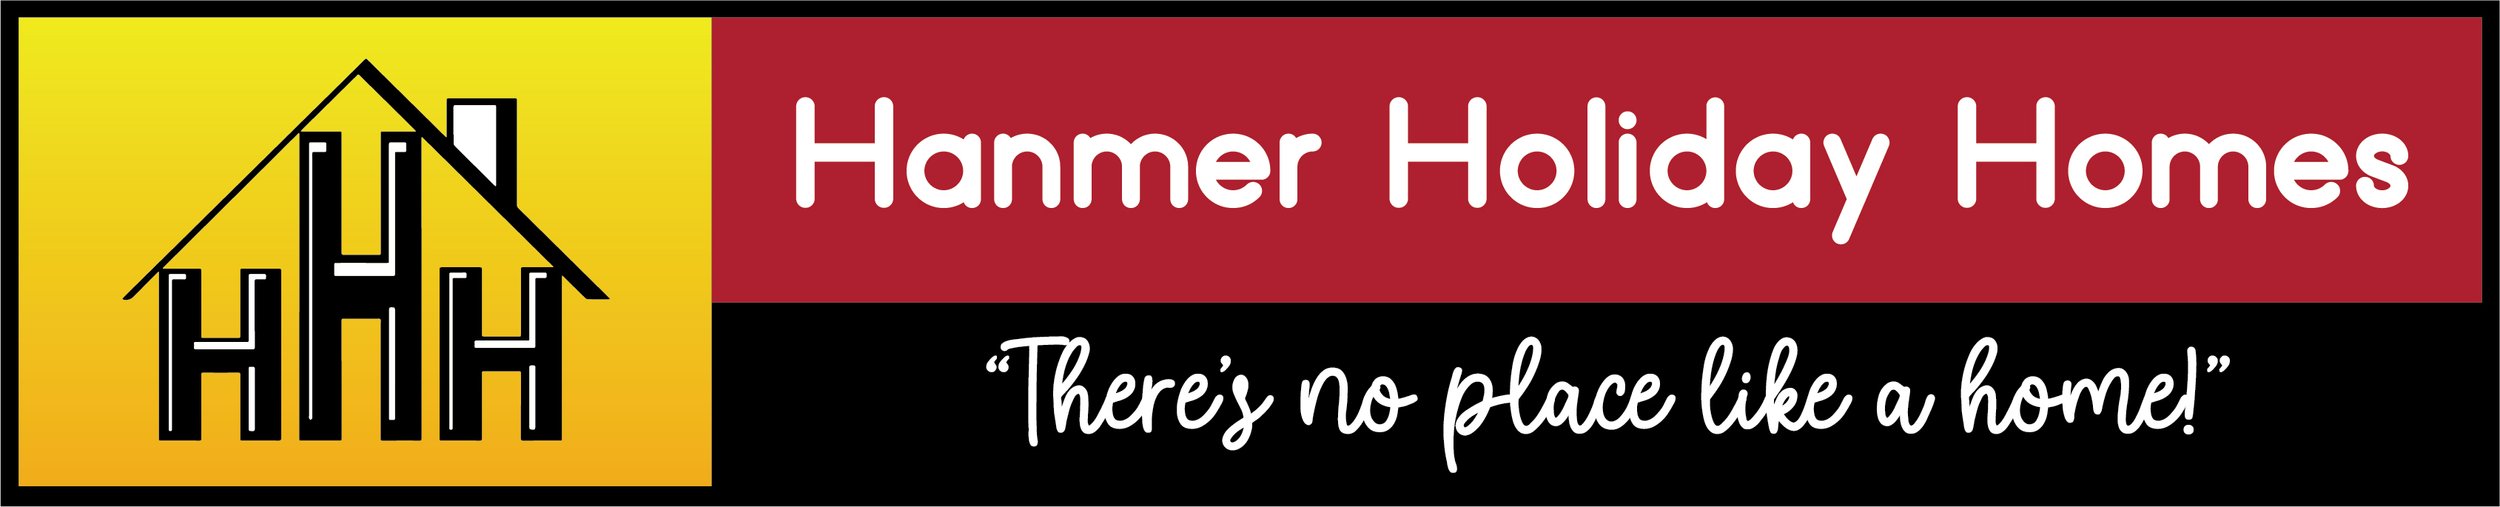 Hanmer Holiday Homes (Copy)